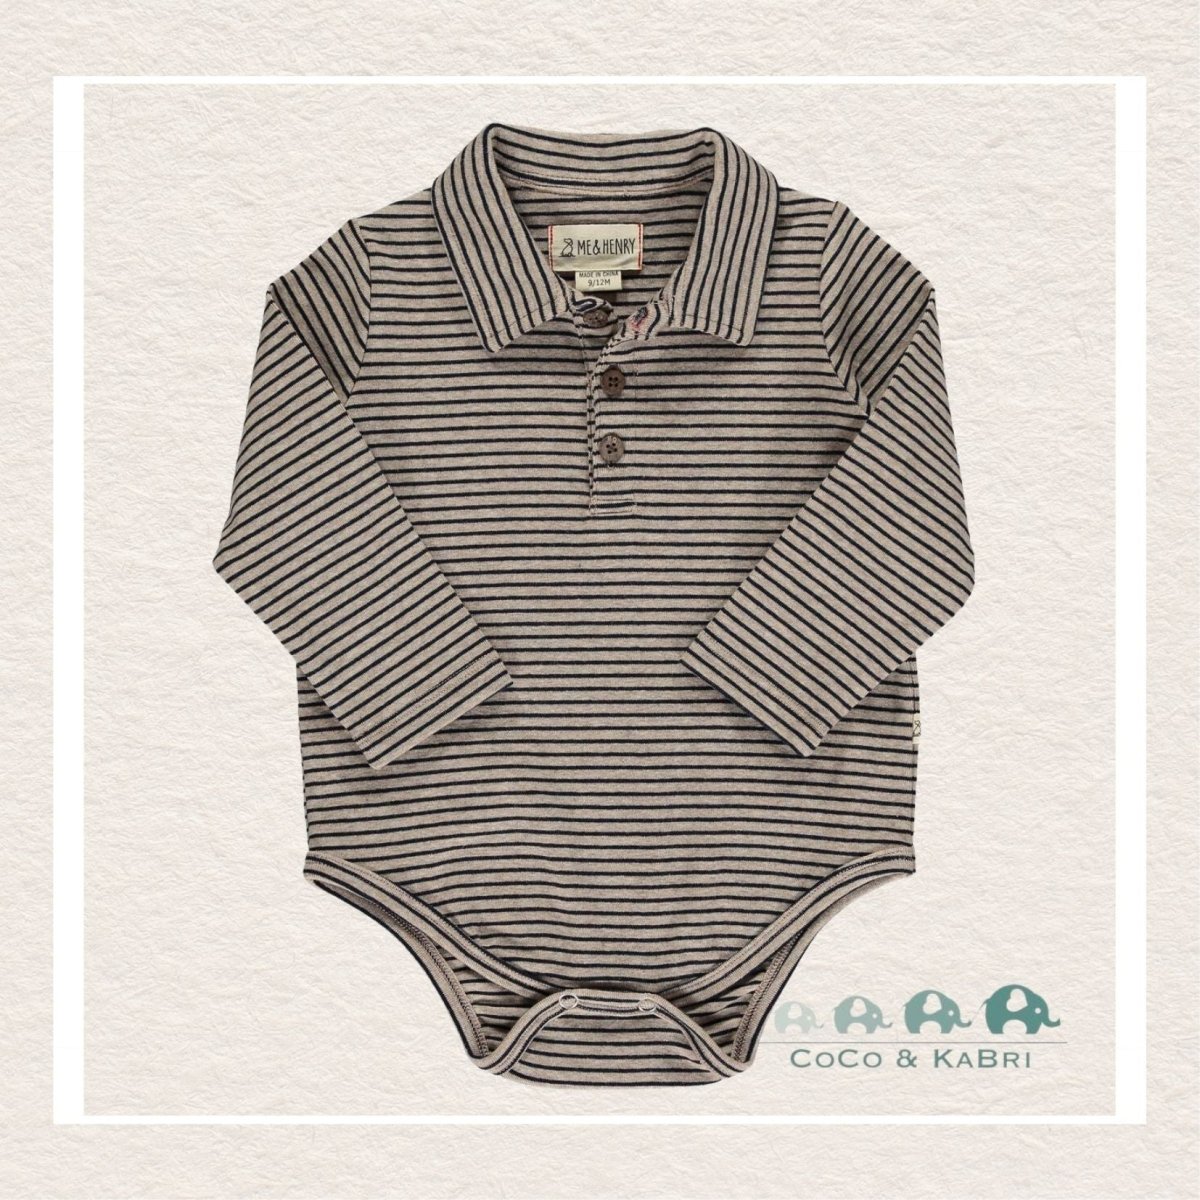 Me & Henry: Seymour Baby Boy Polo Diaper Shirt - Black/Beige Stripe